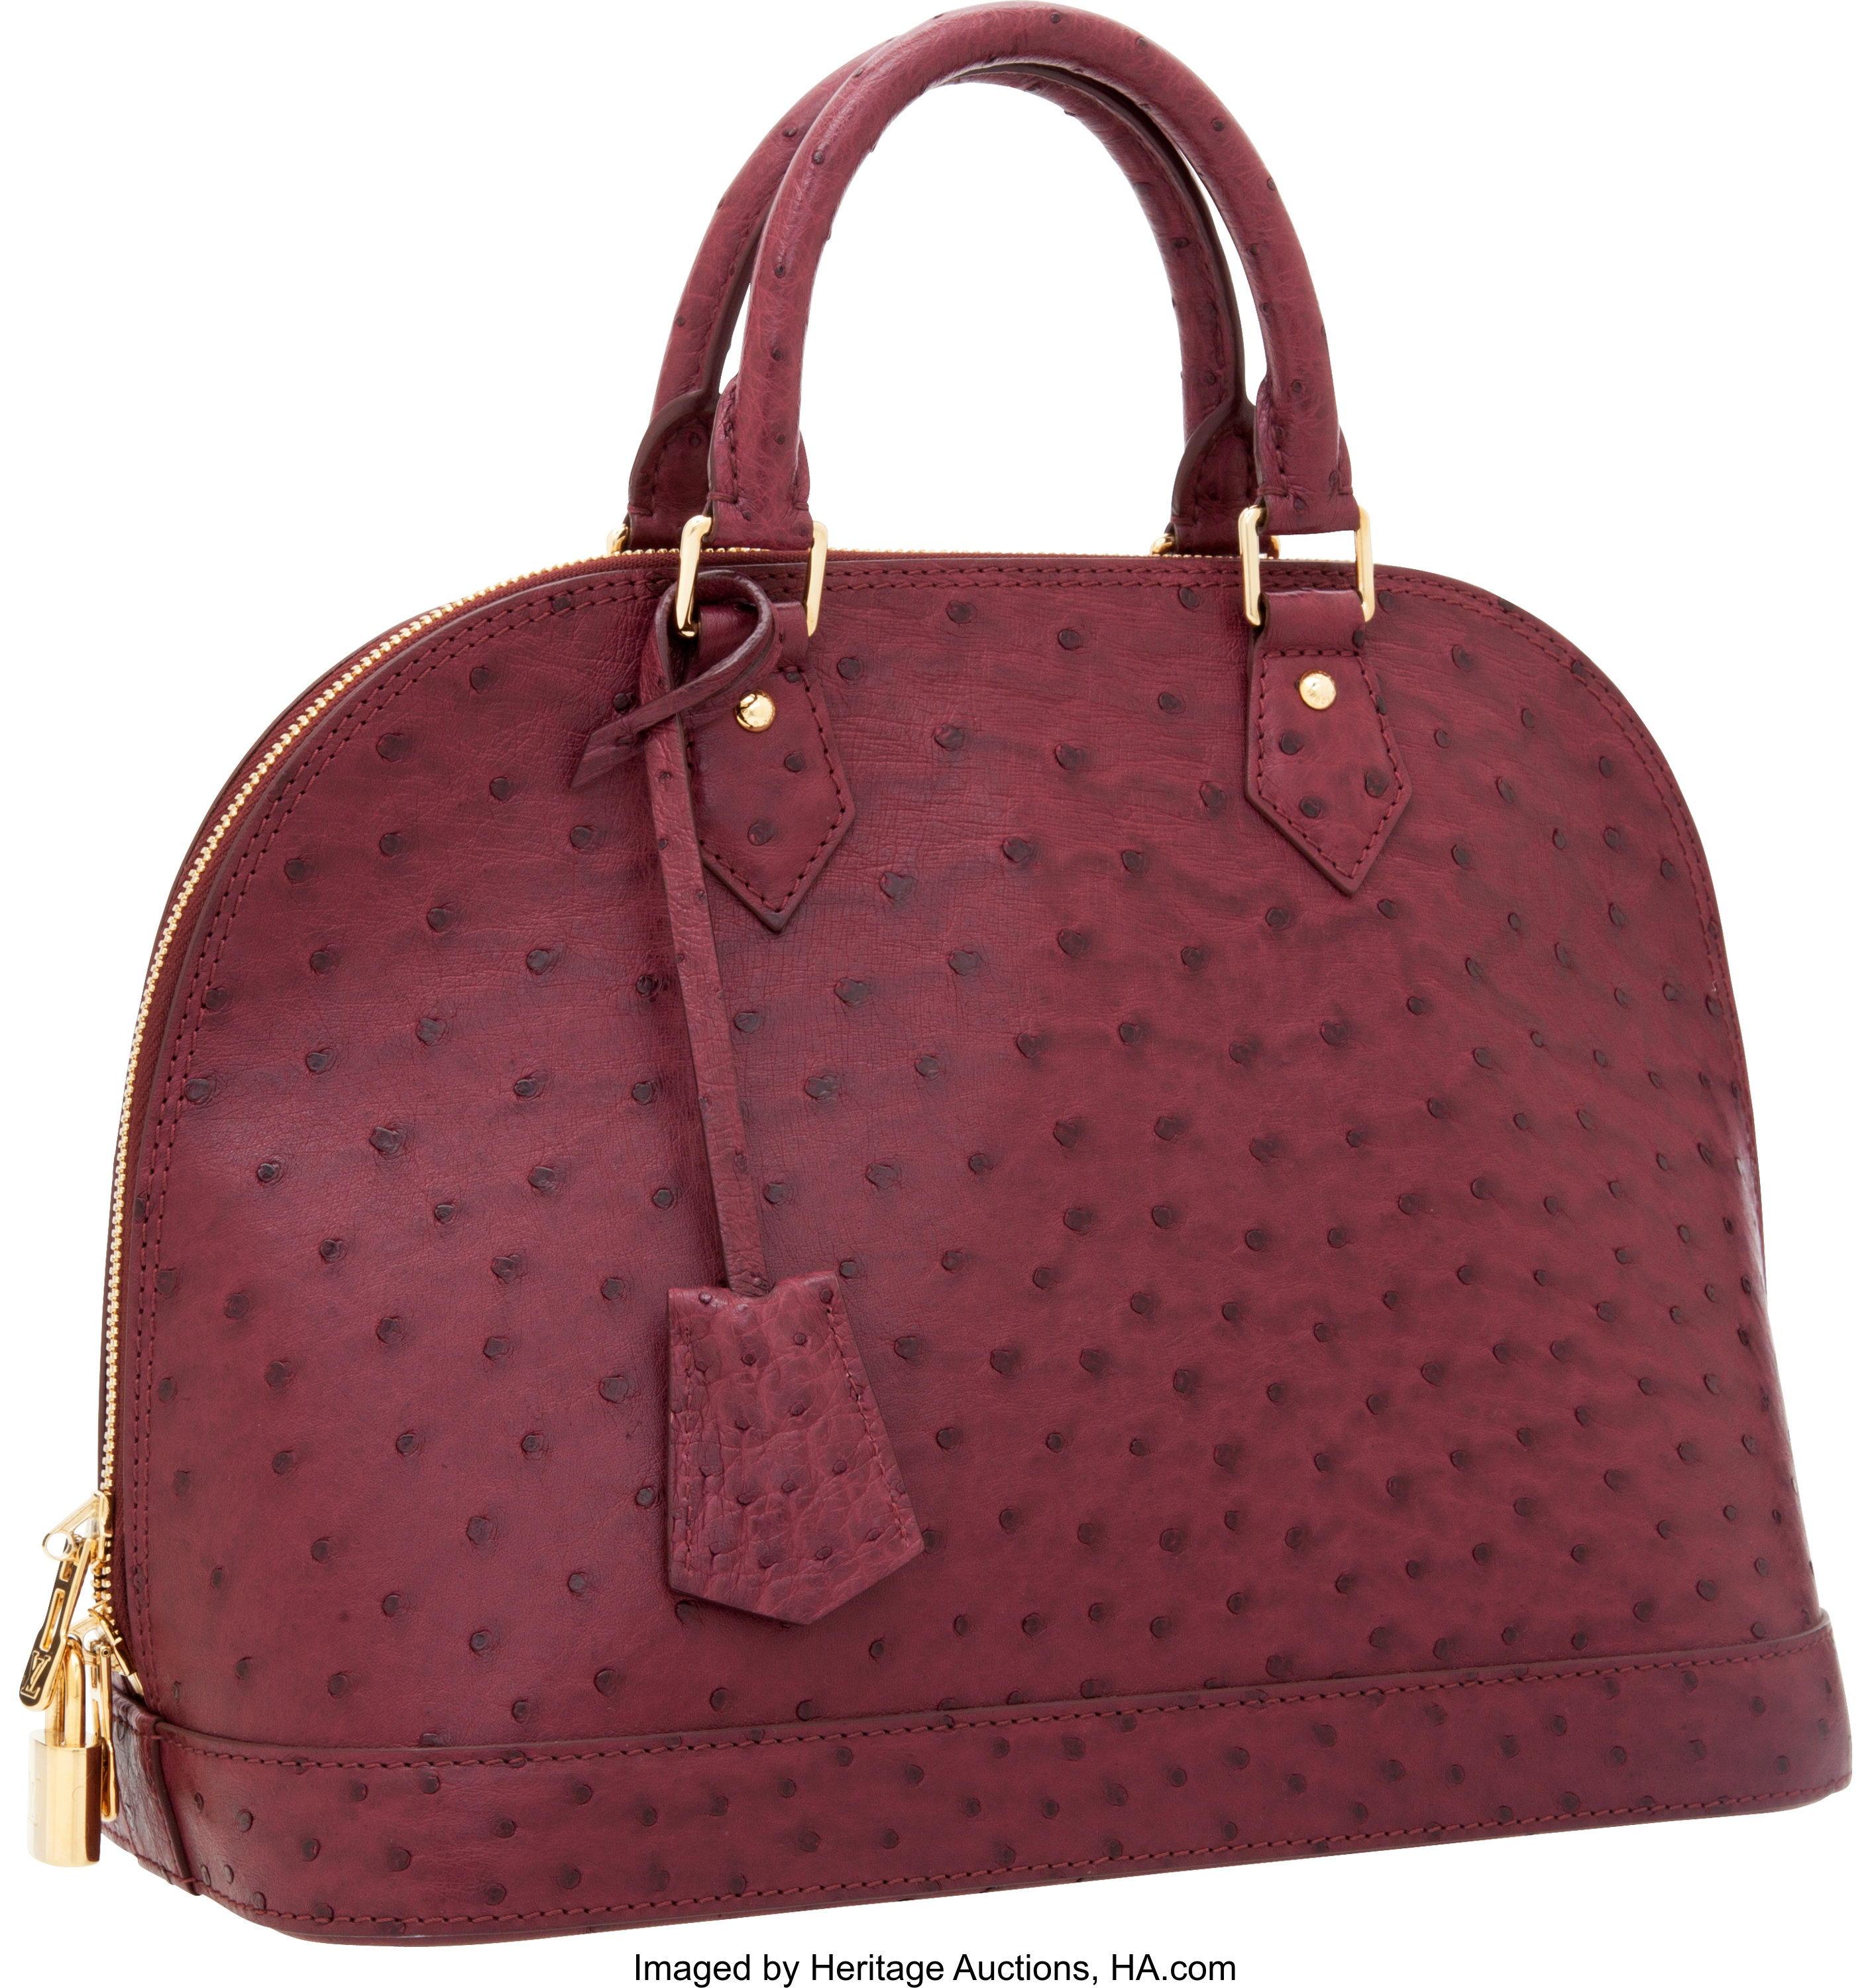 Louis Vuitton Alma luxury designer handbags - price guide and values